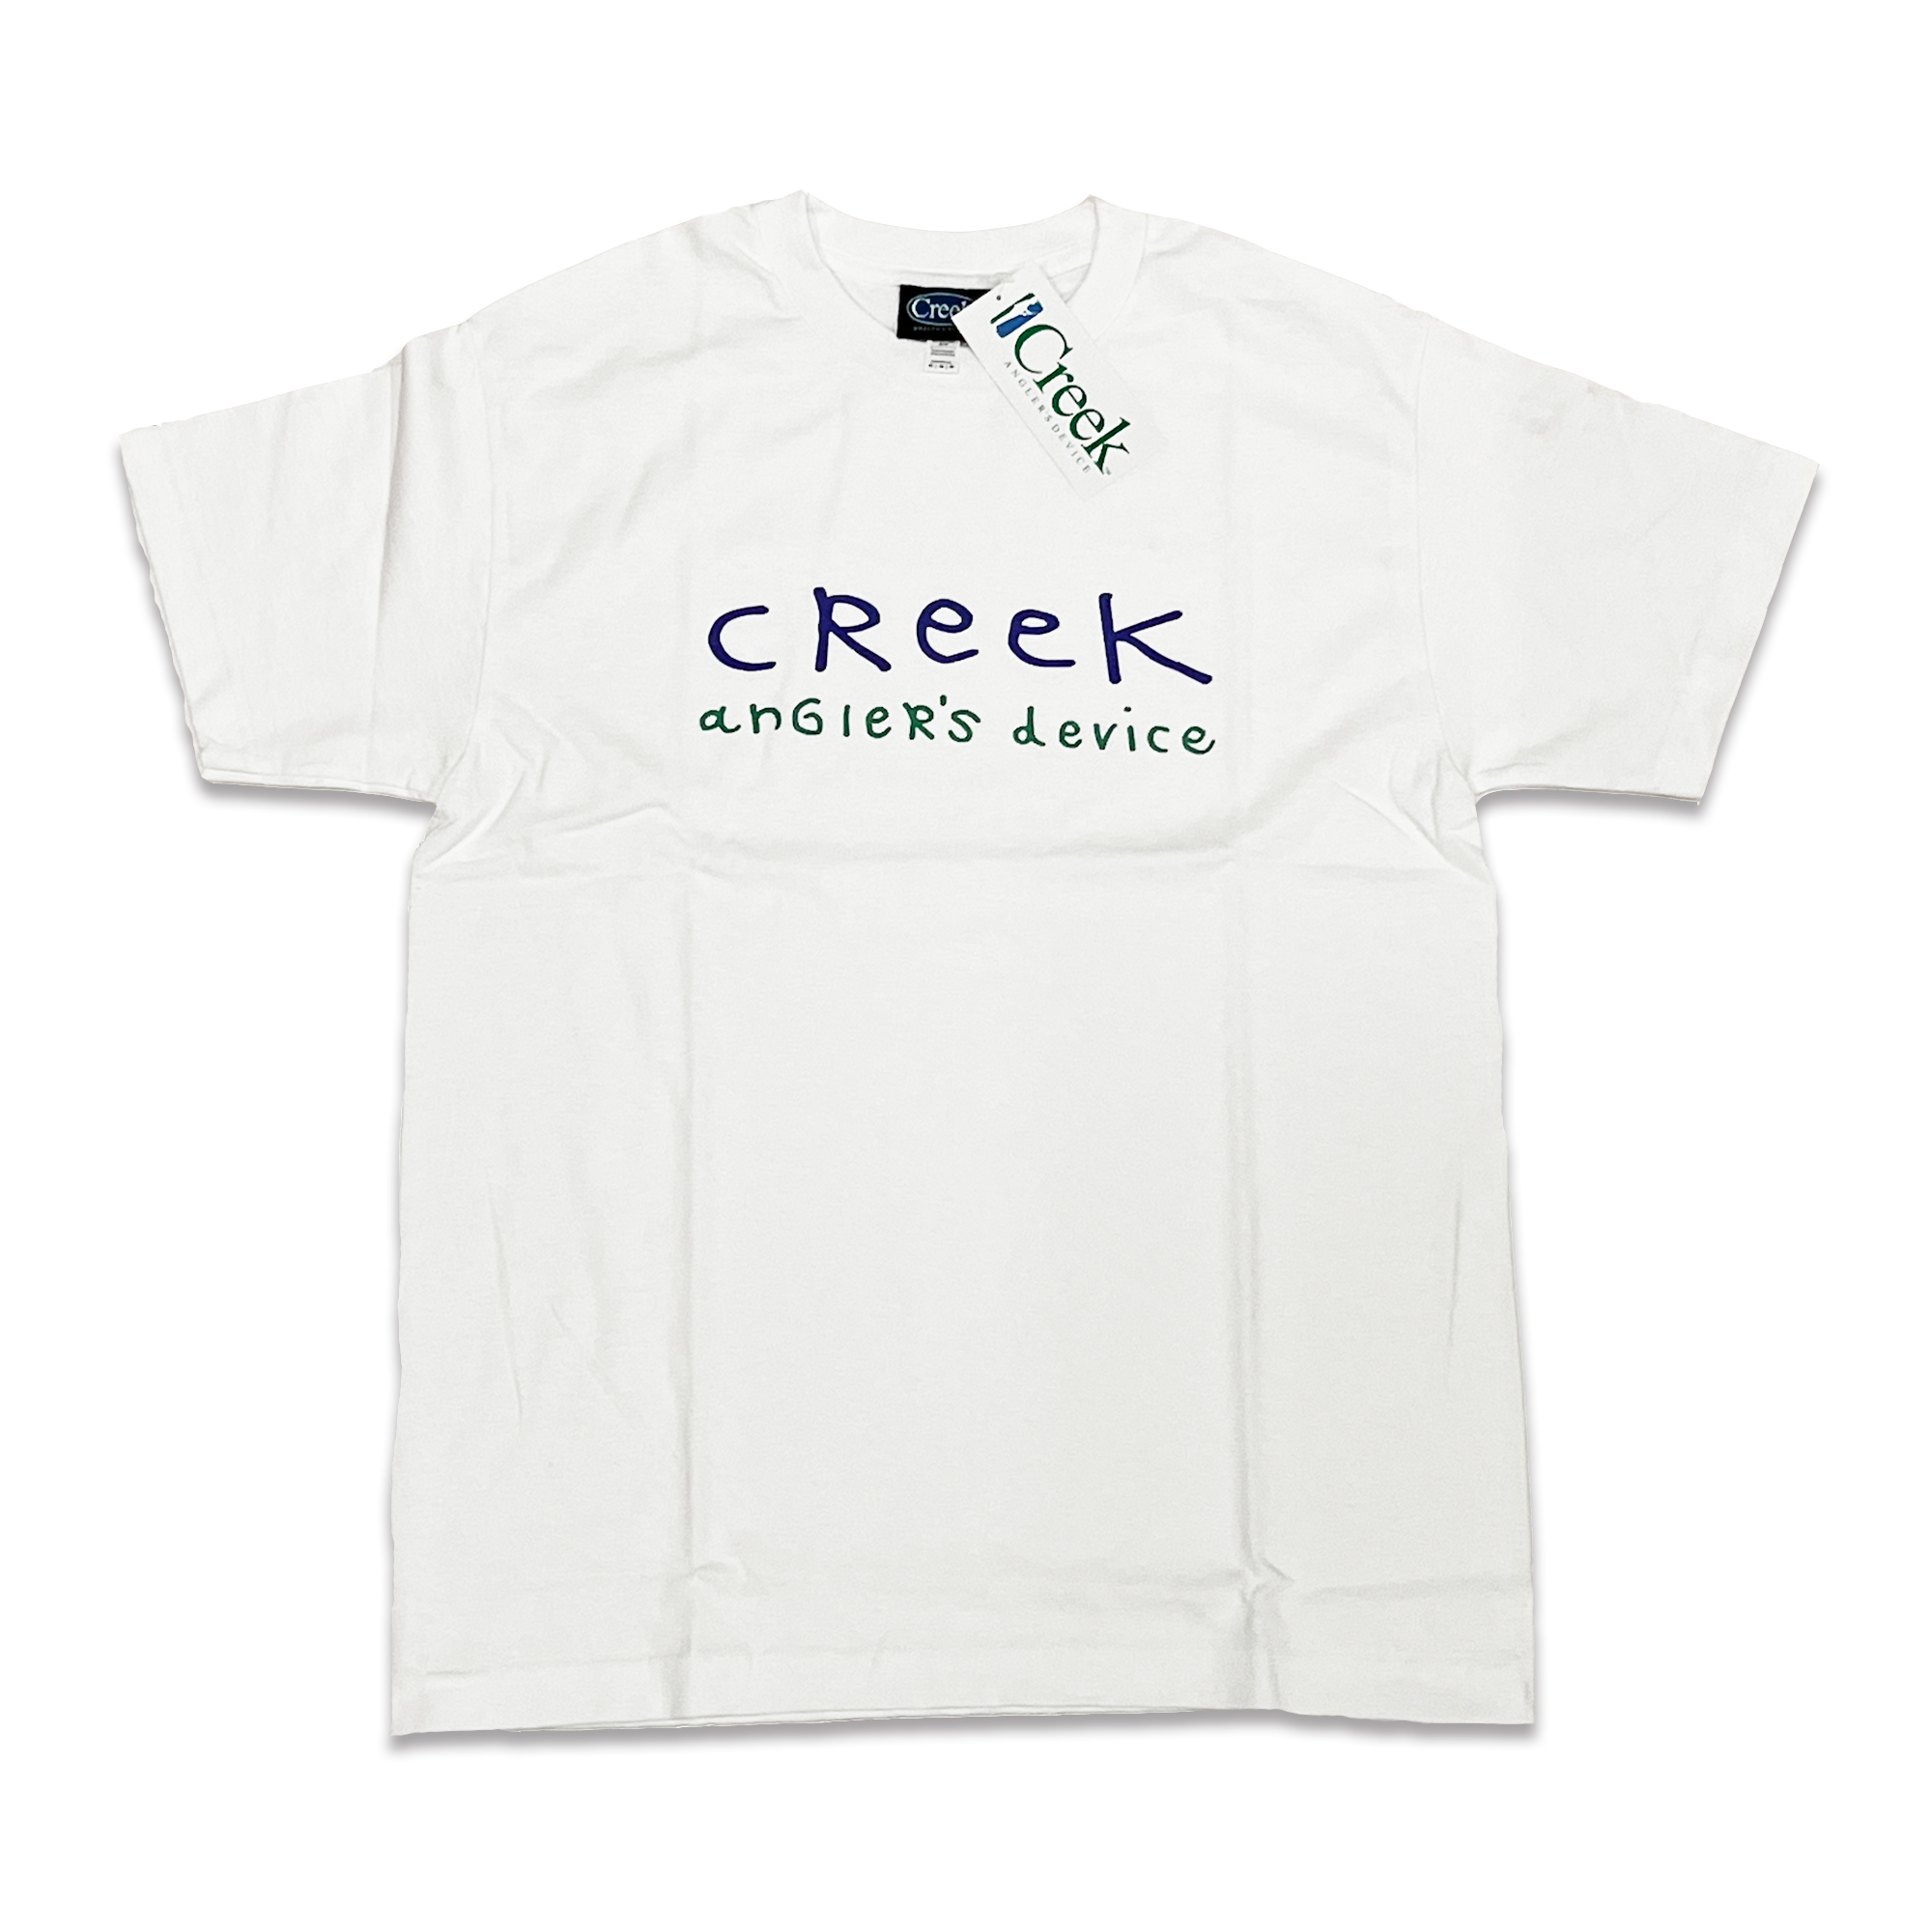 Creek Angler's Device T-shirt